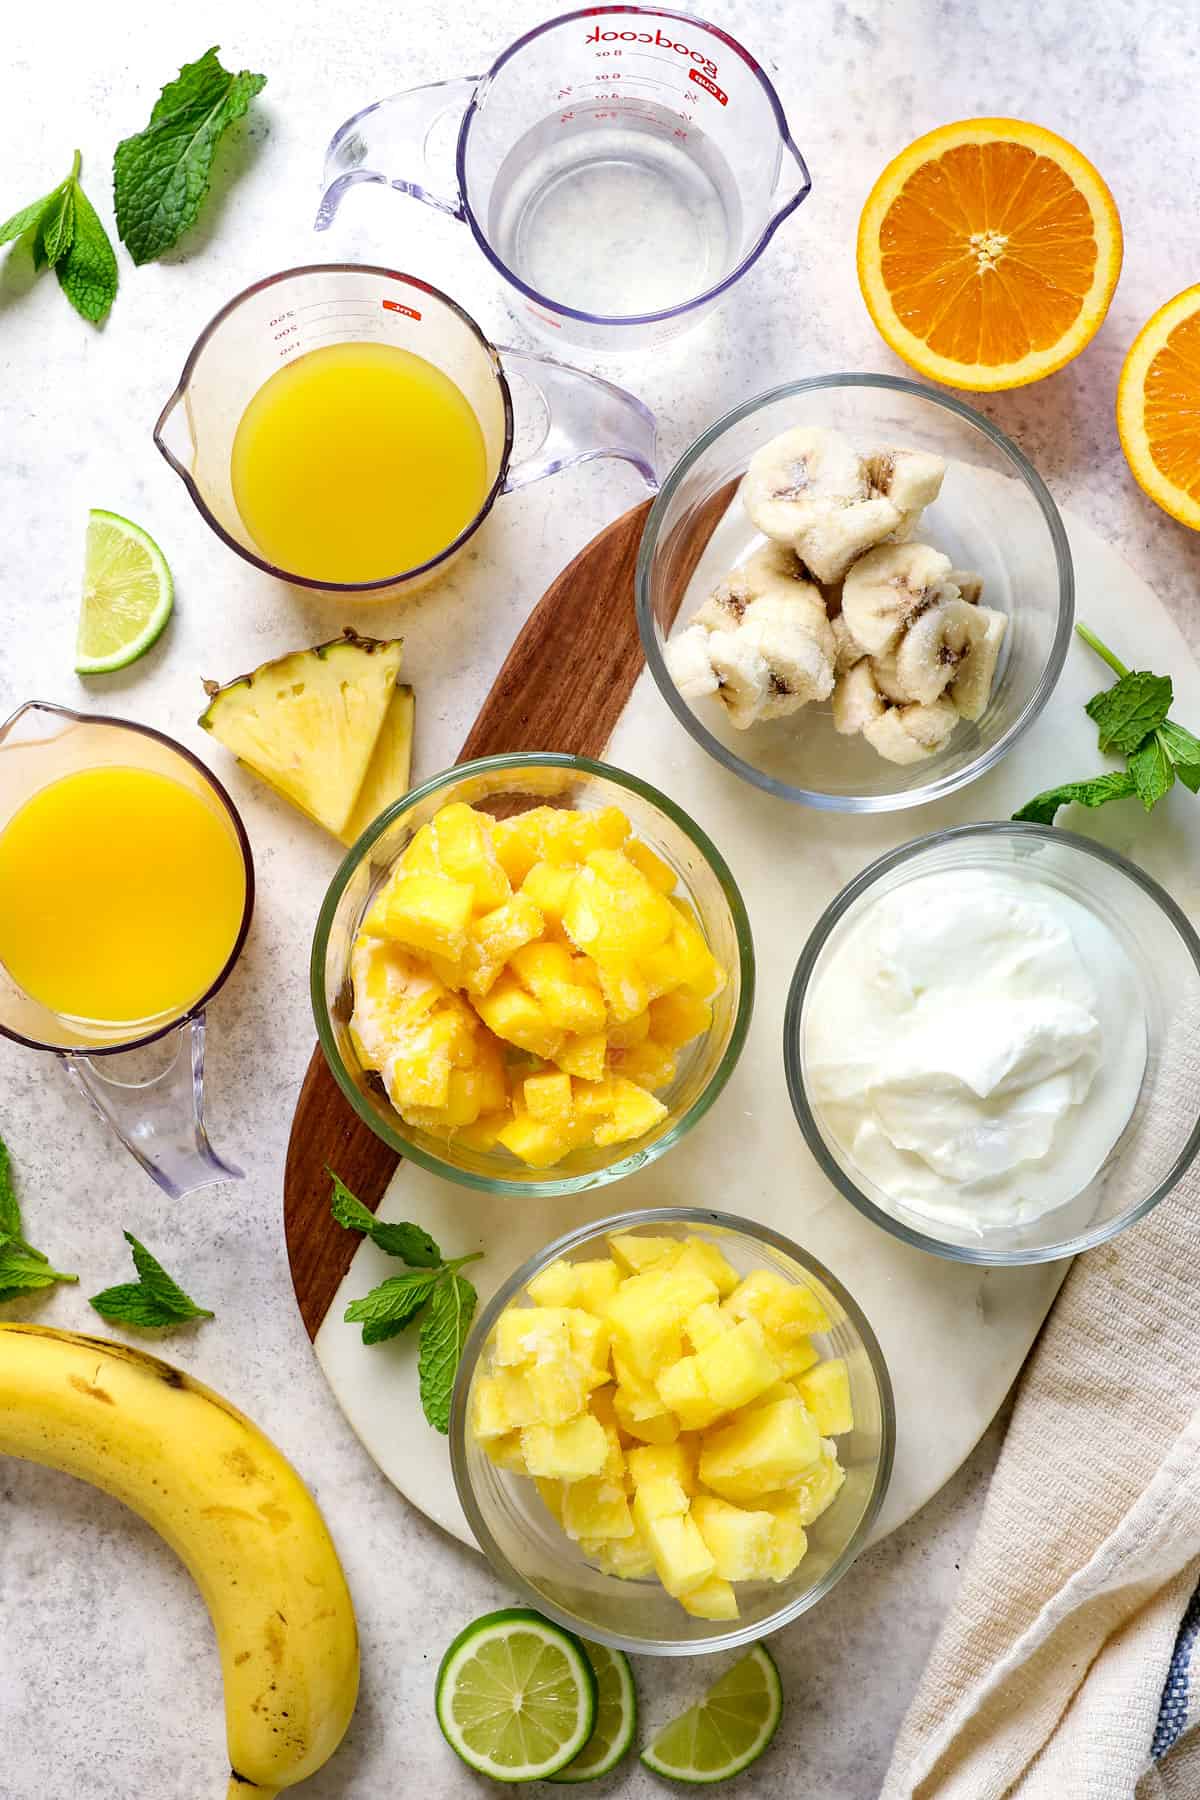 Top view showing ingredients for Tropical Smoothie recipe:  pineapple, mangos, banana, vanilla yogurt, pineapple juice, orange juice and coconut water